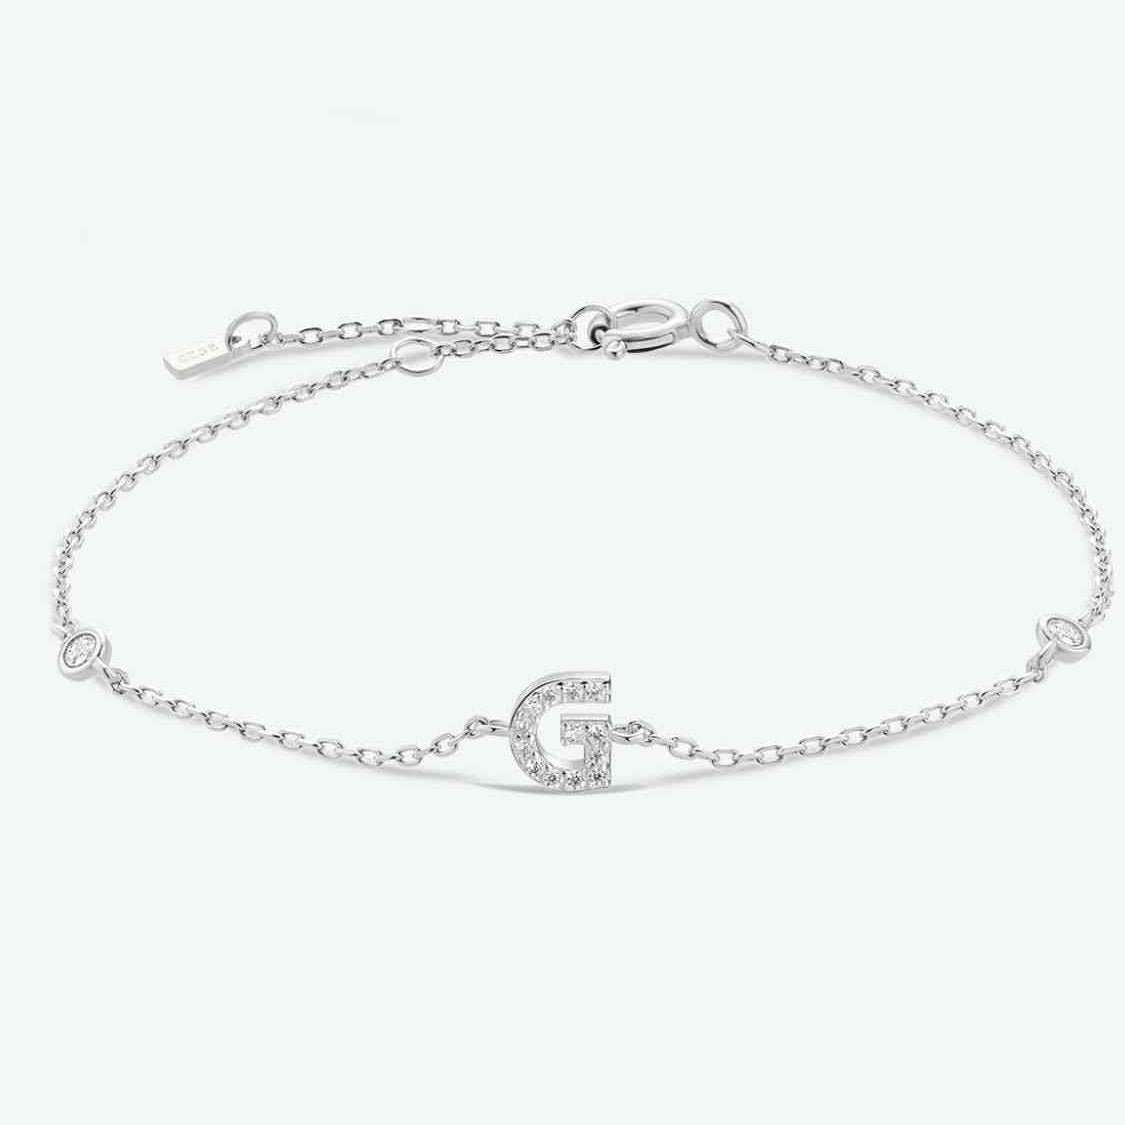 G To K Zircon 925 Sterling Silver Bracelet